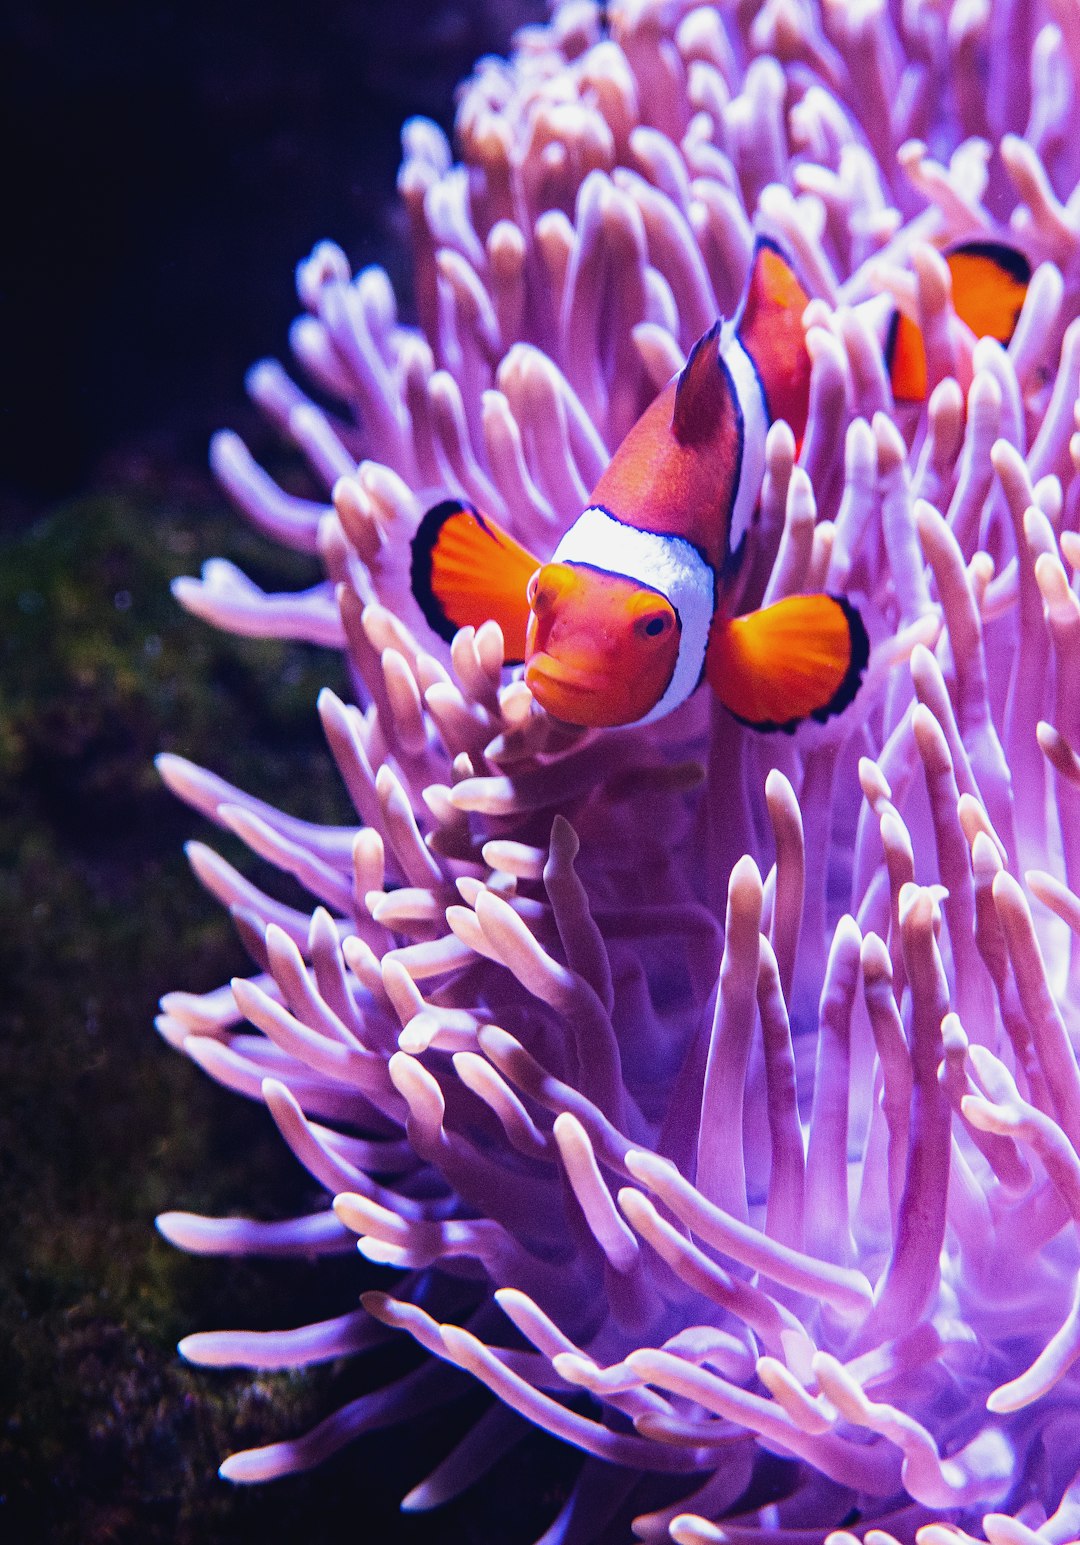 Travel Tips and Stories of Cairns Aquarium in Australia